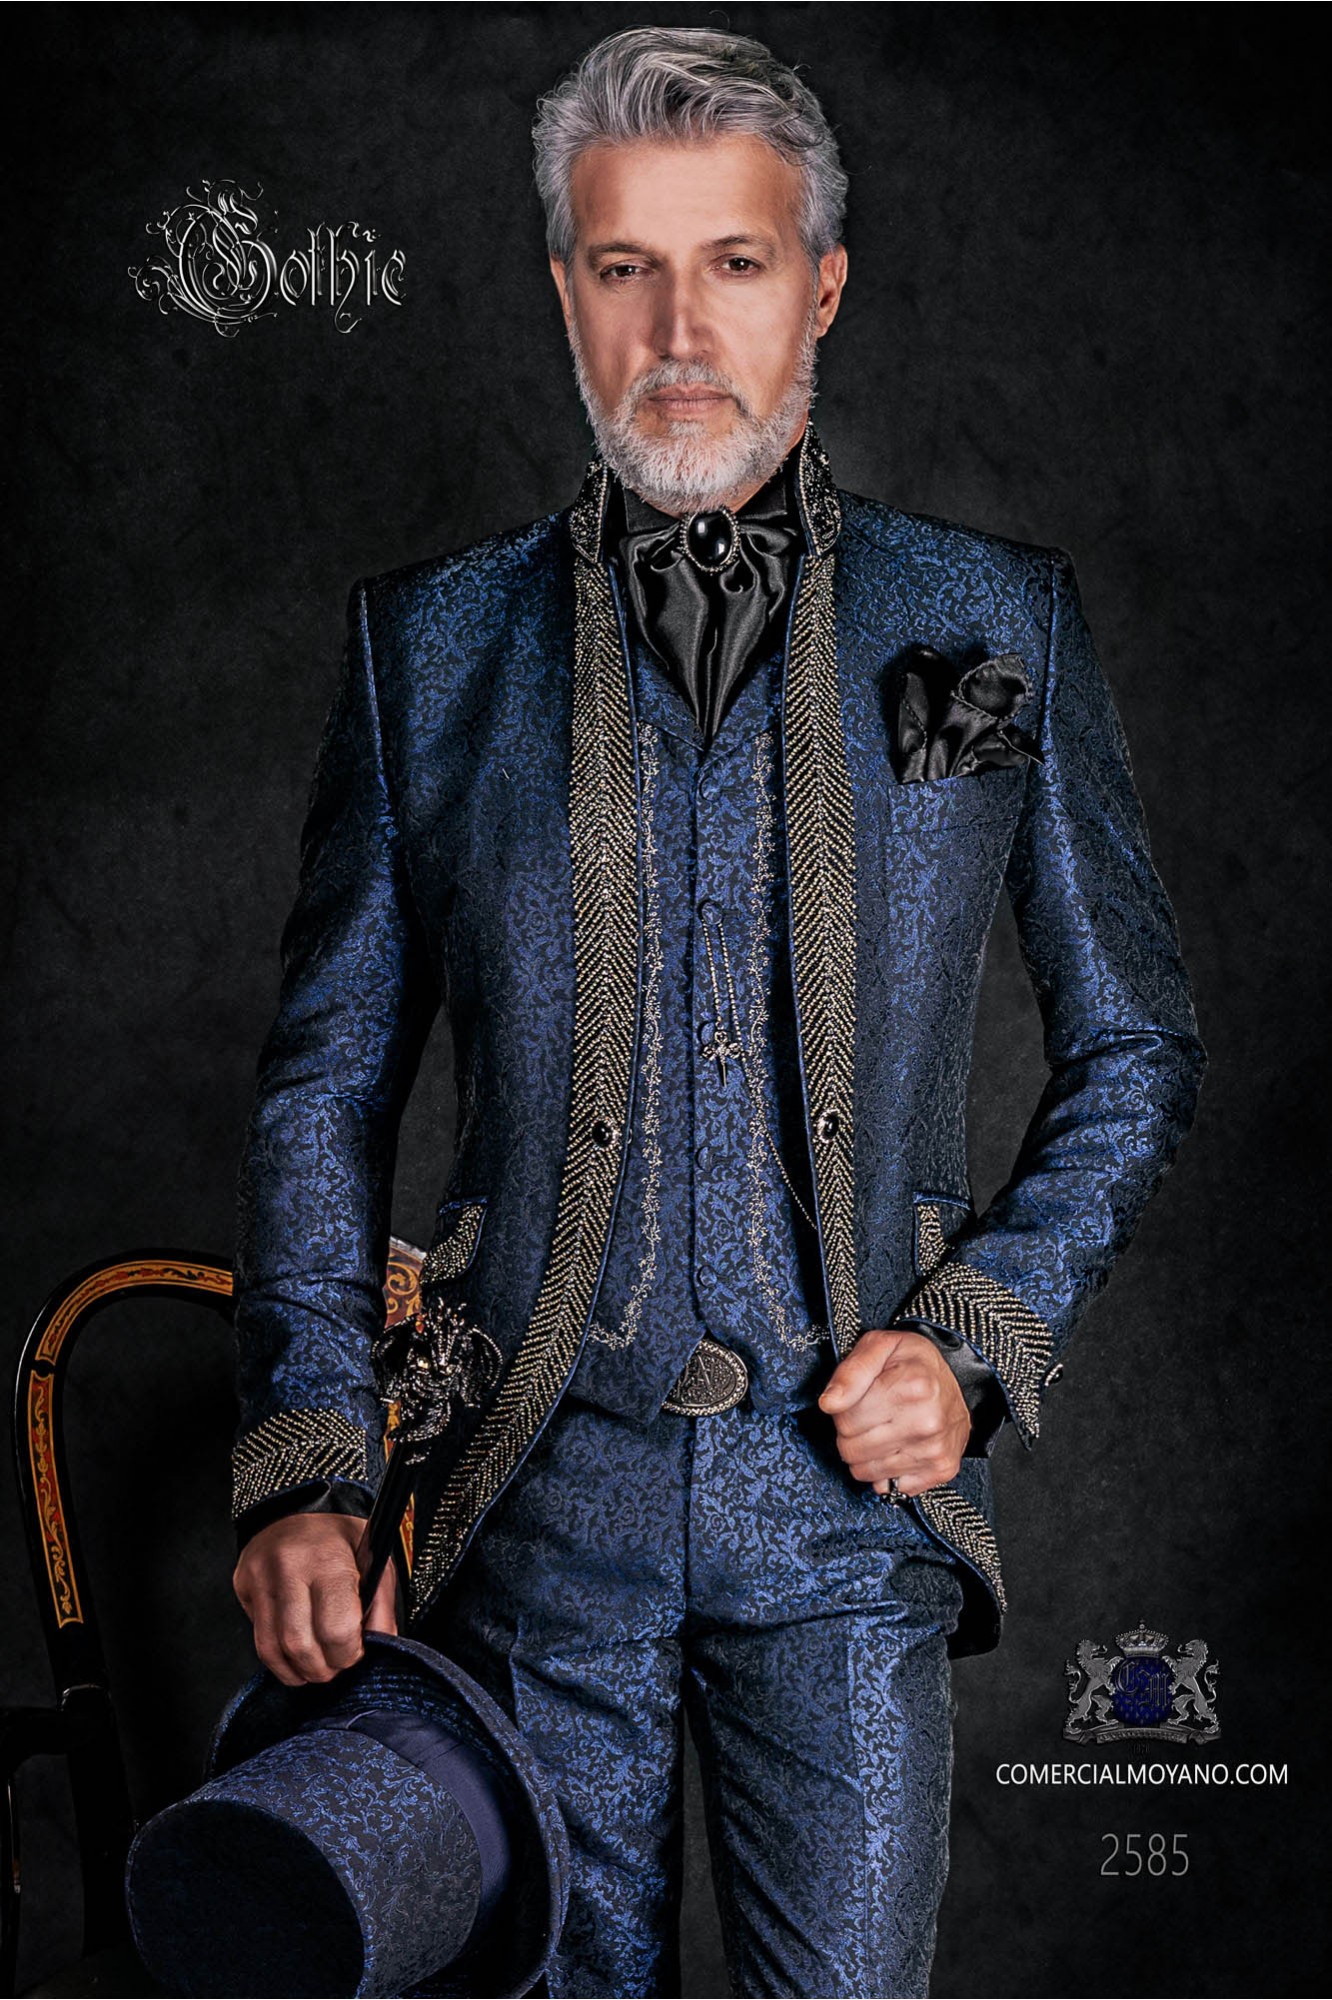 Wedding suit, vintage mao frock coat in blue jacquard fabric with black rhinestones